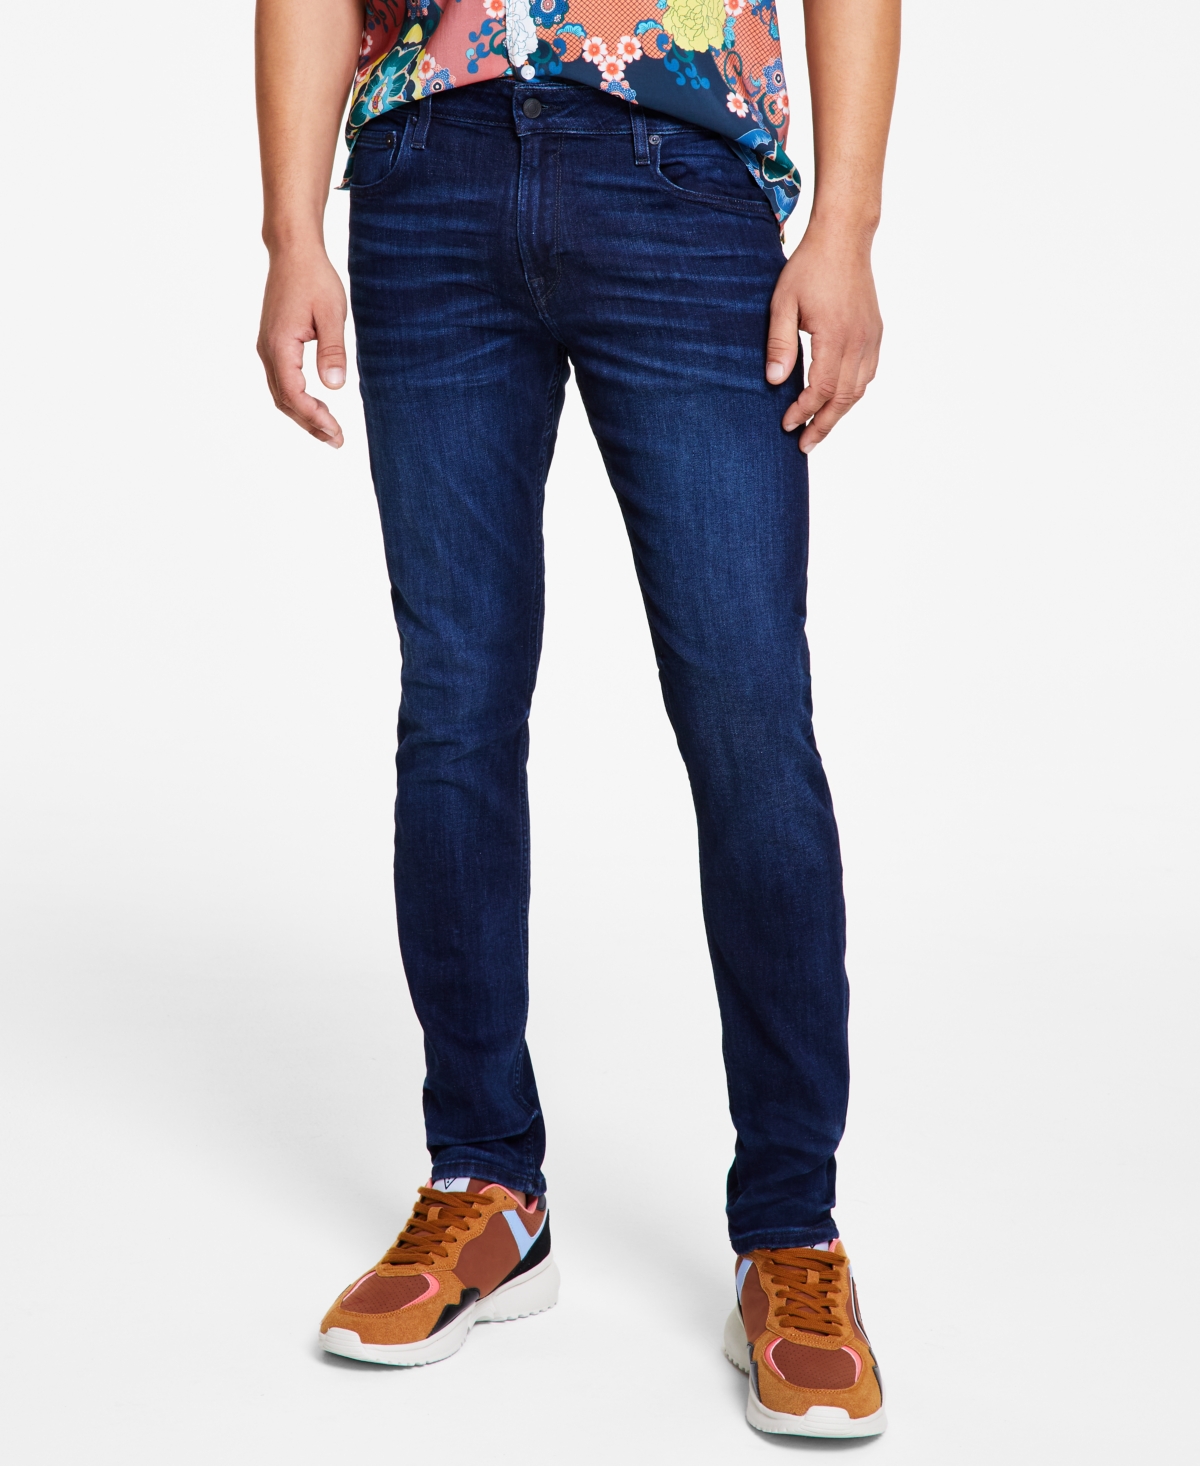 Men's Eco Slim Tapered Fit Jeans - Ringer Wash Indigo